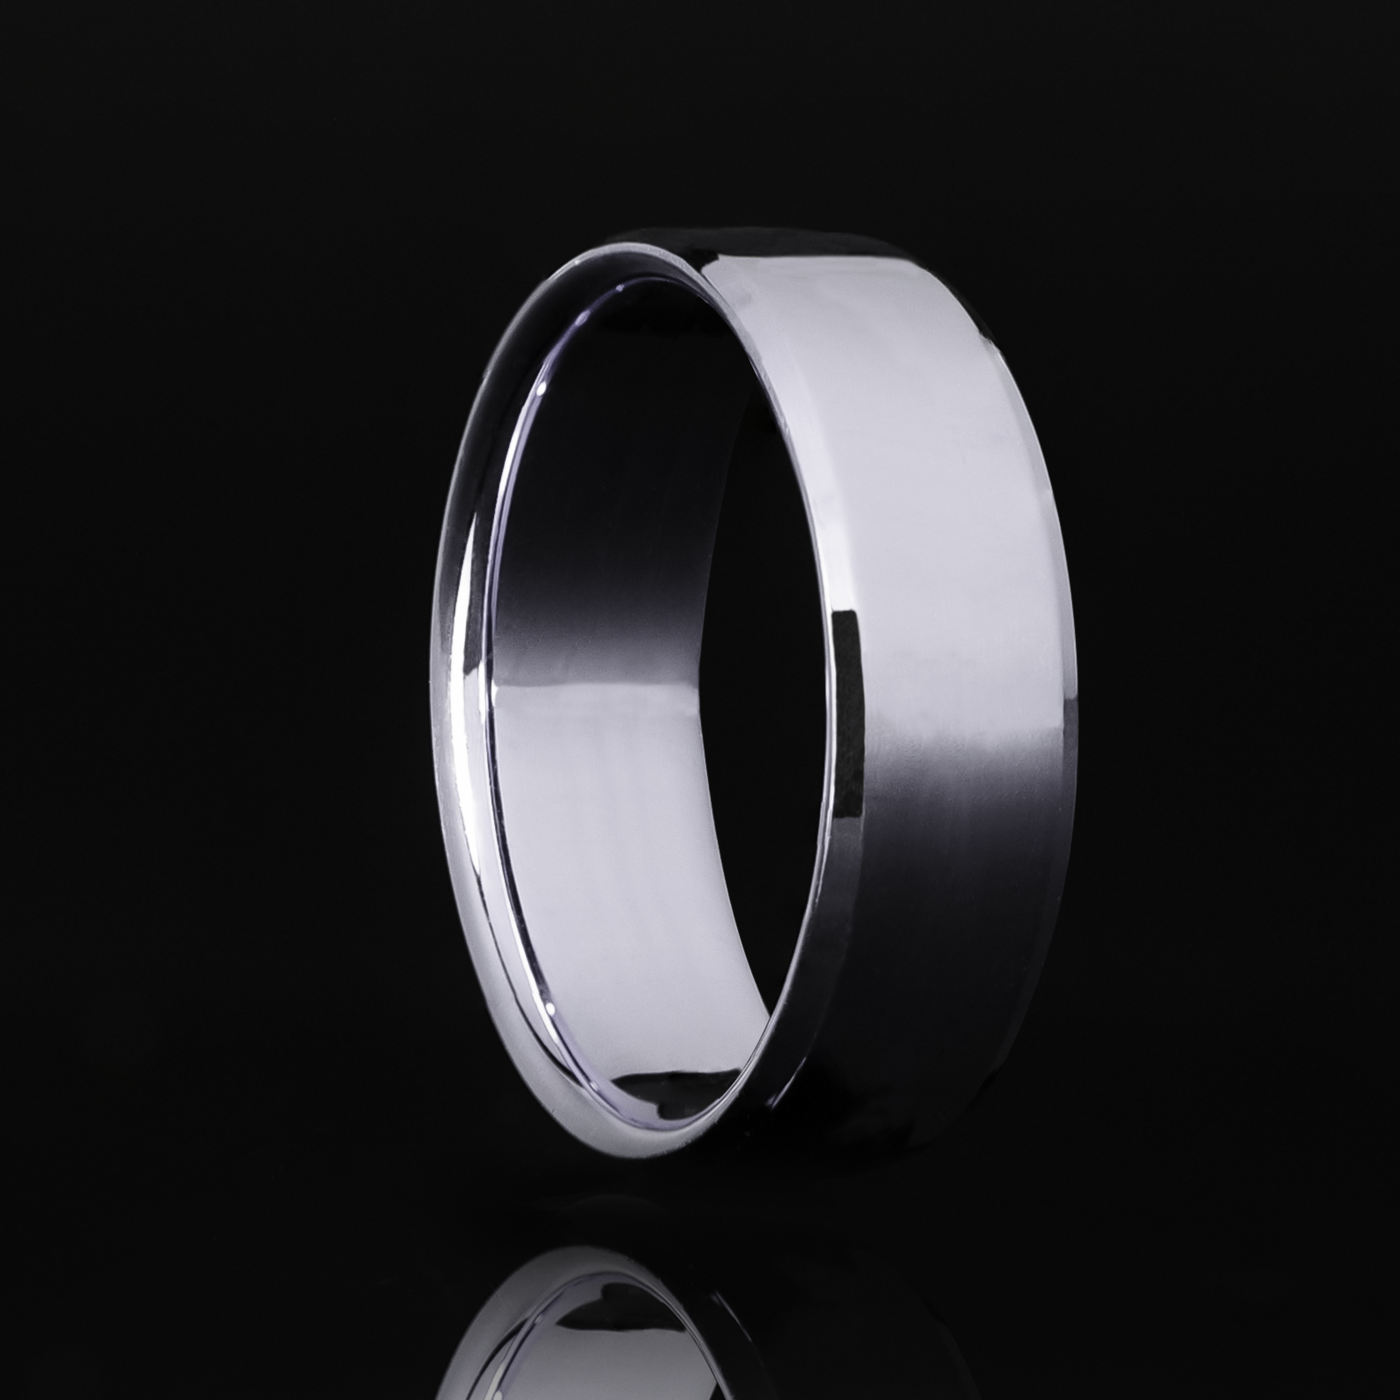 7mm Beveled Platinum Ring - Patrick Adair Designs